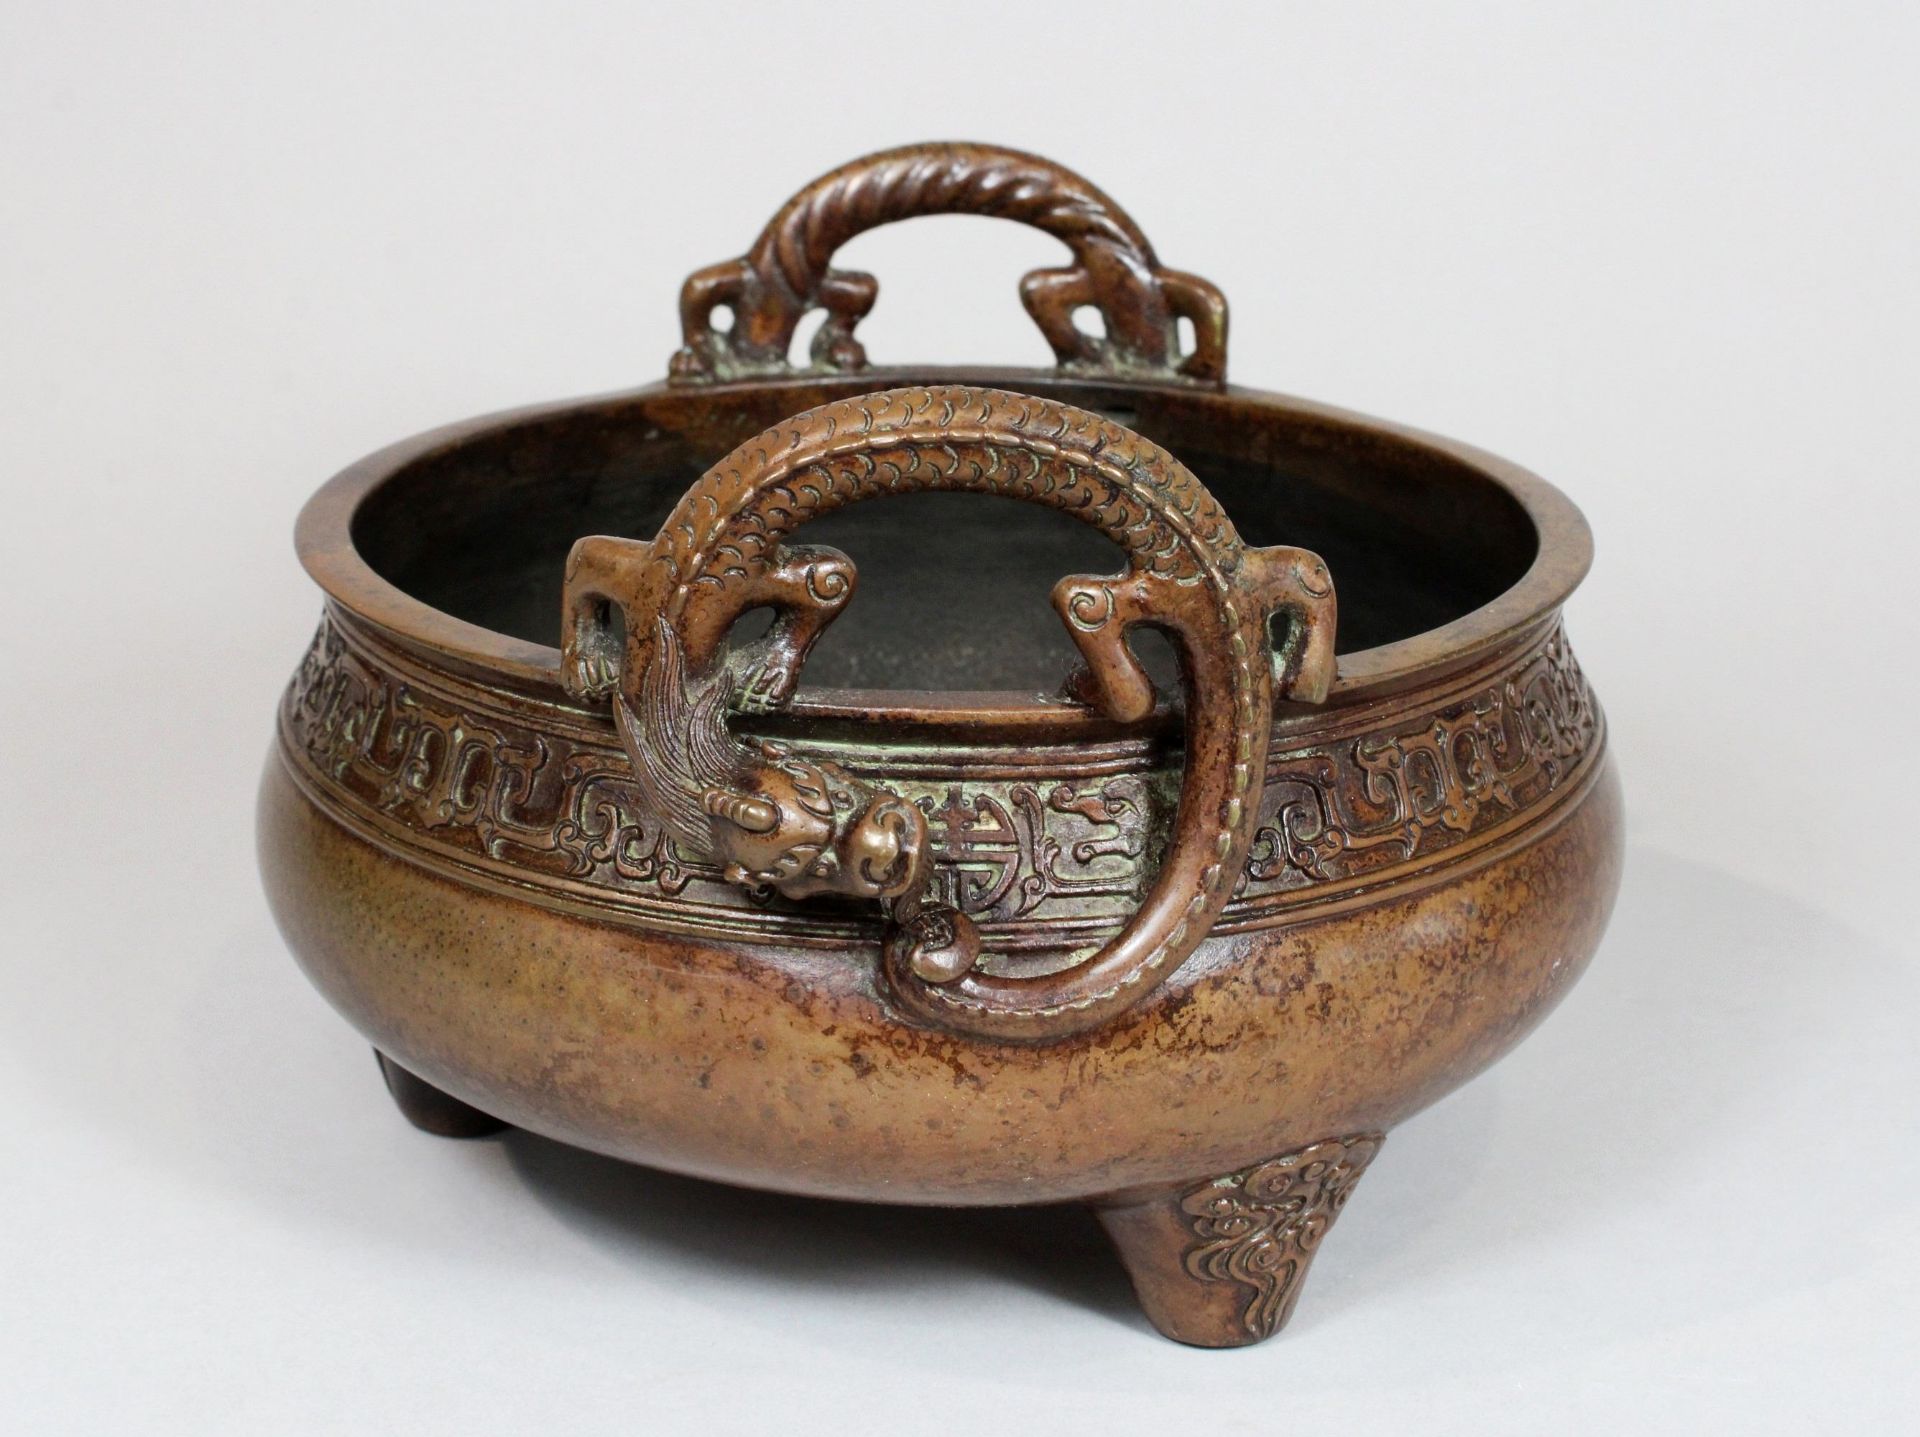 Weihrauchgefäß, China, Bronze, Marke: Da Ming Xuan De Nian Zhi, mit Drachen-Henkeln, Dm.: 16,7 cm, - Bild 2 aus 3